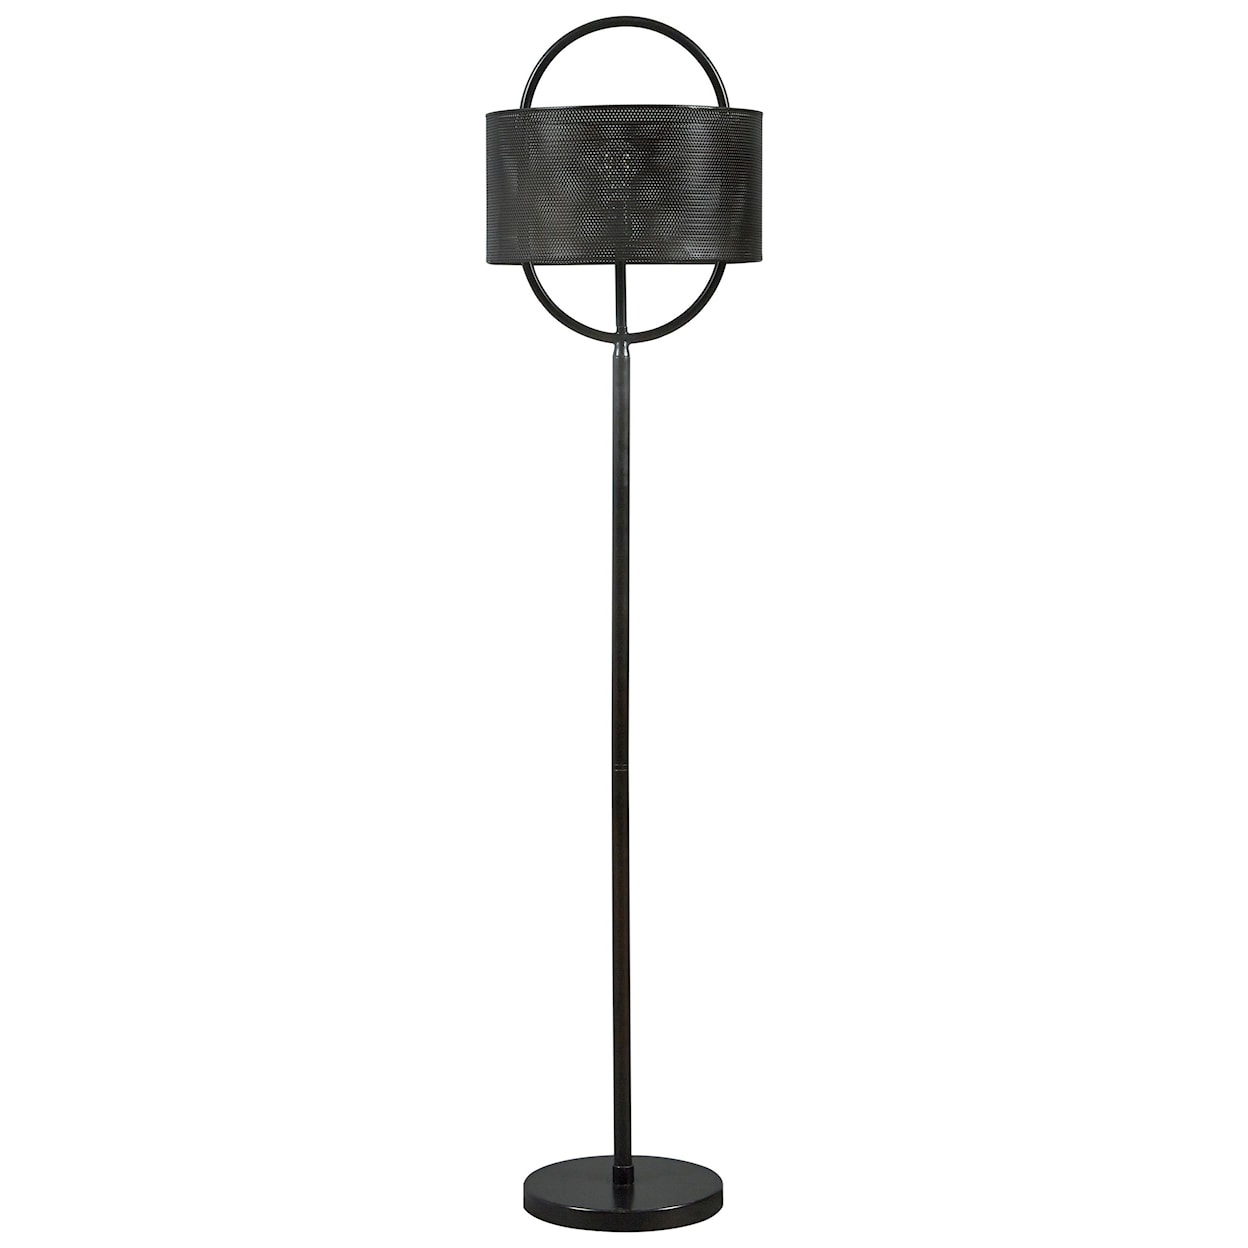 Ashley Furniture Signature Design Lamps - Contemporary Majed Bronze Finish Metal Floor Lamp